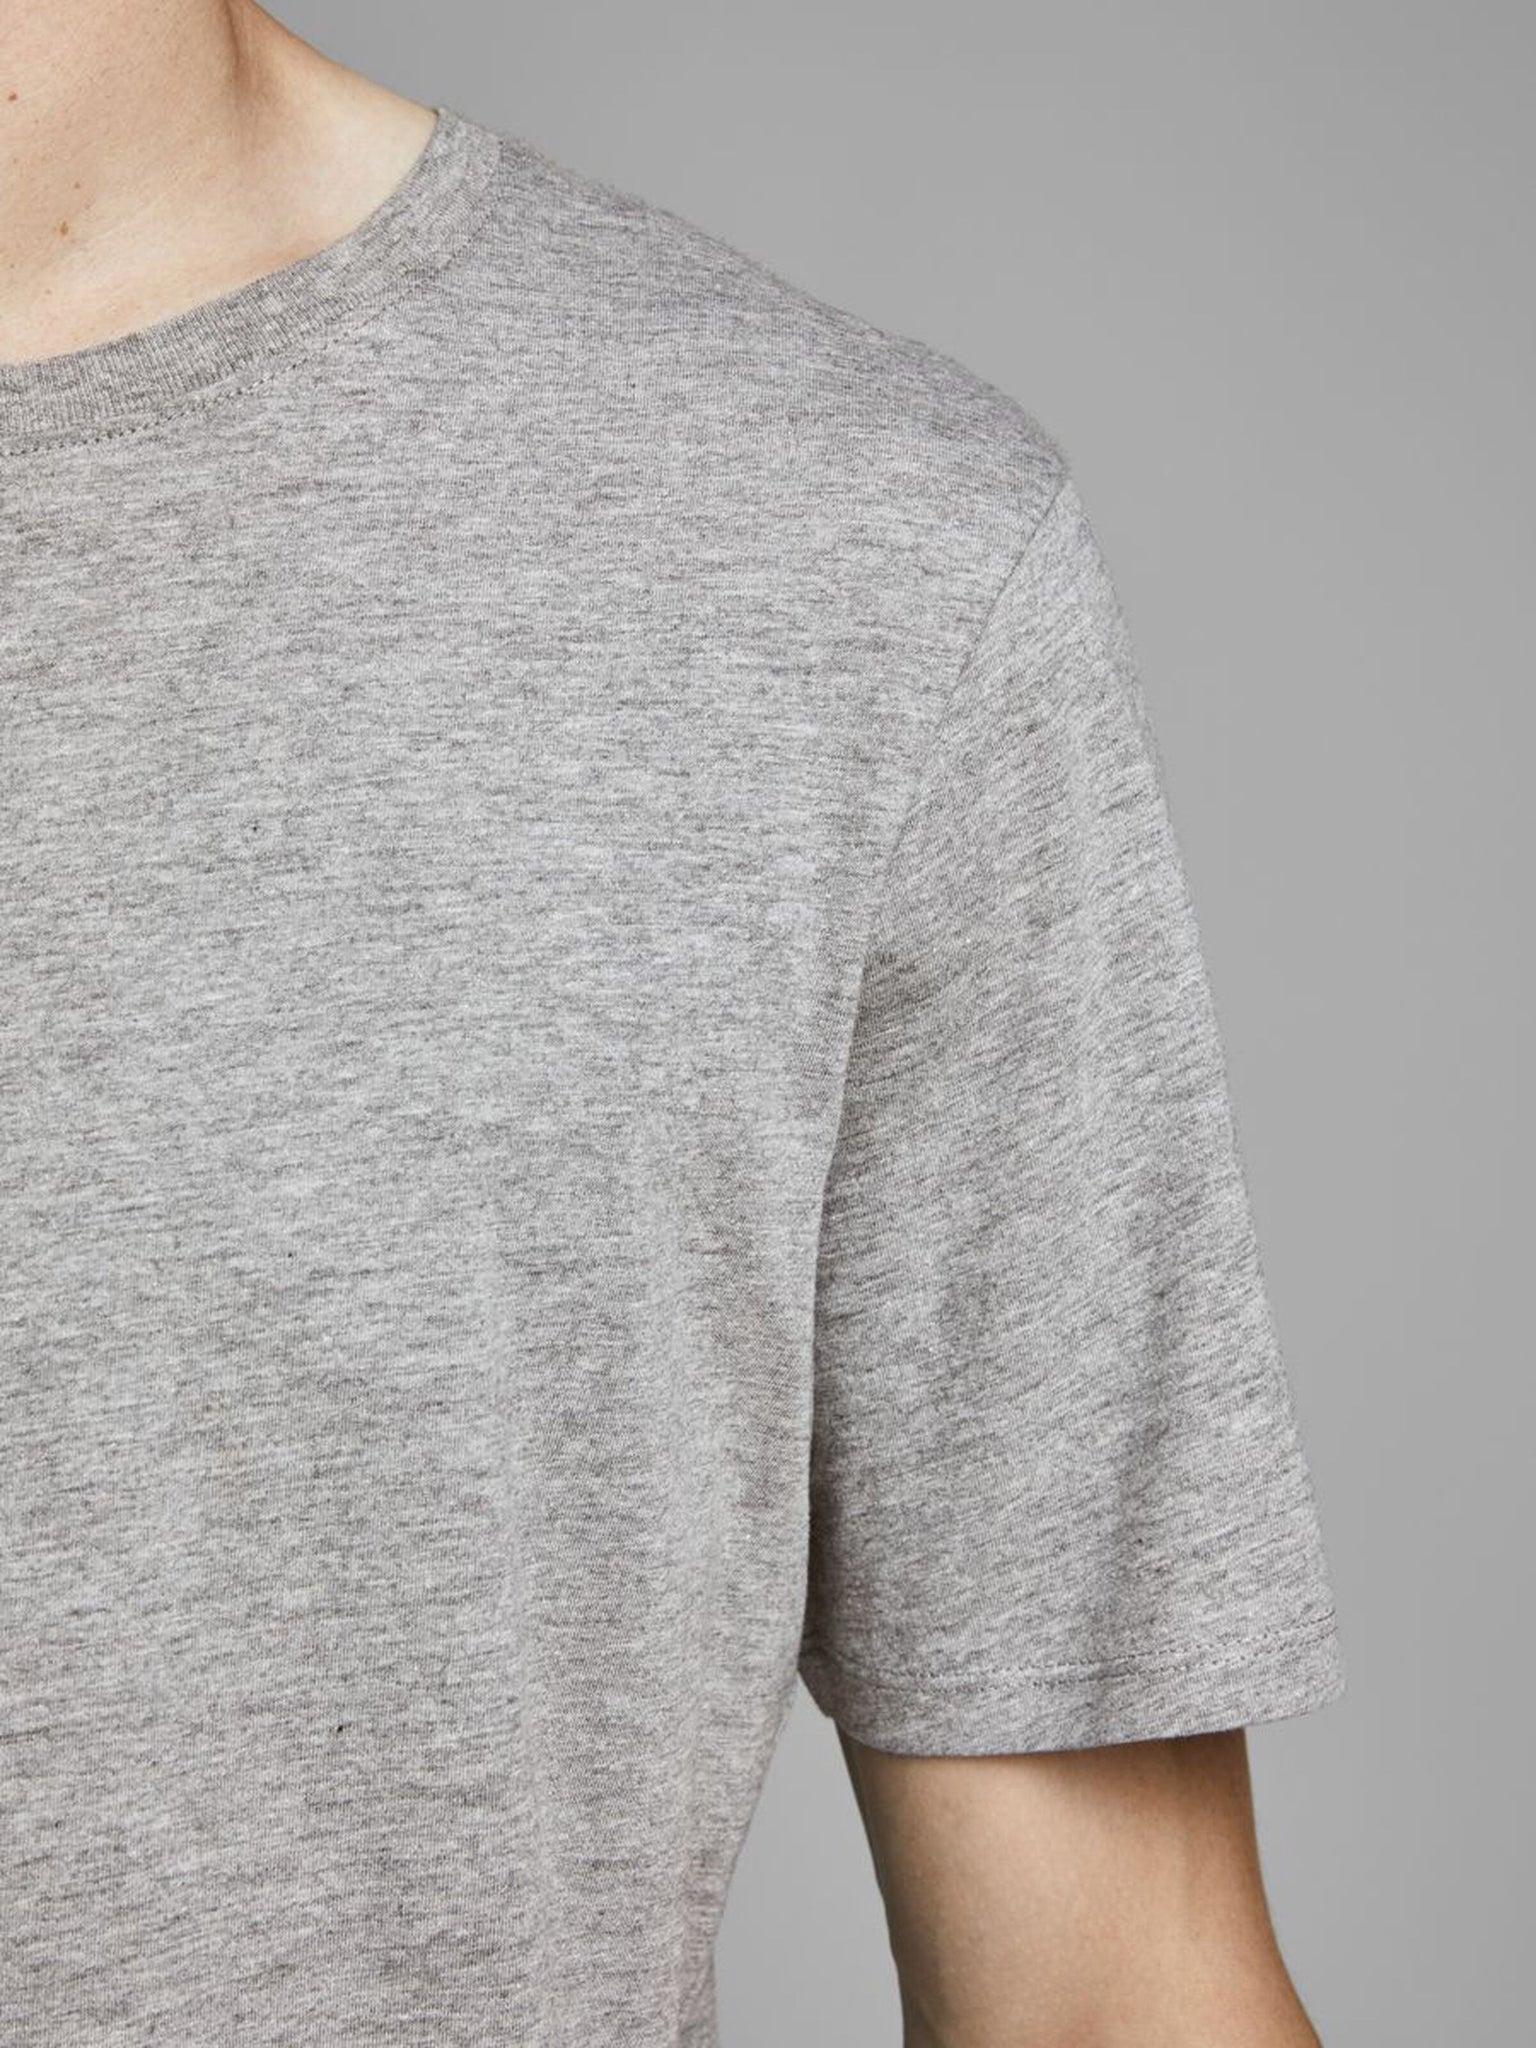 T-shirt Organic basic, light grey melange